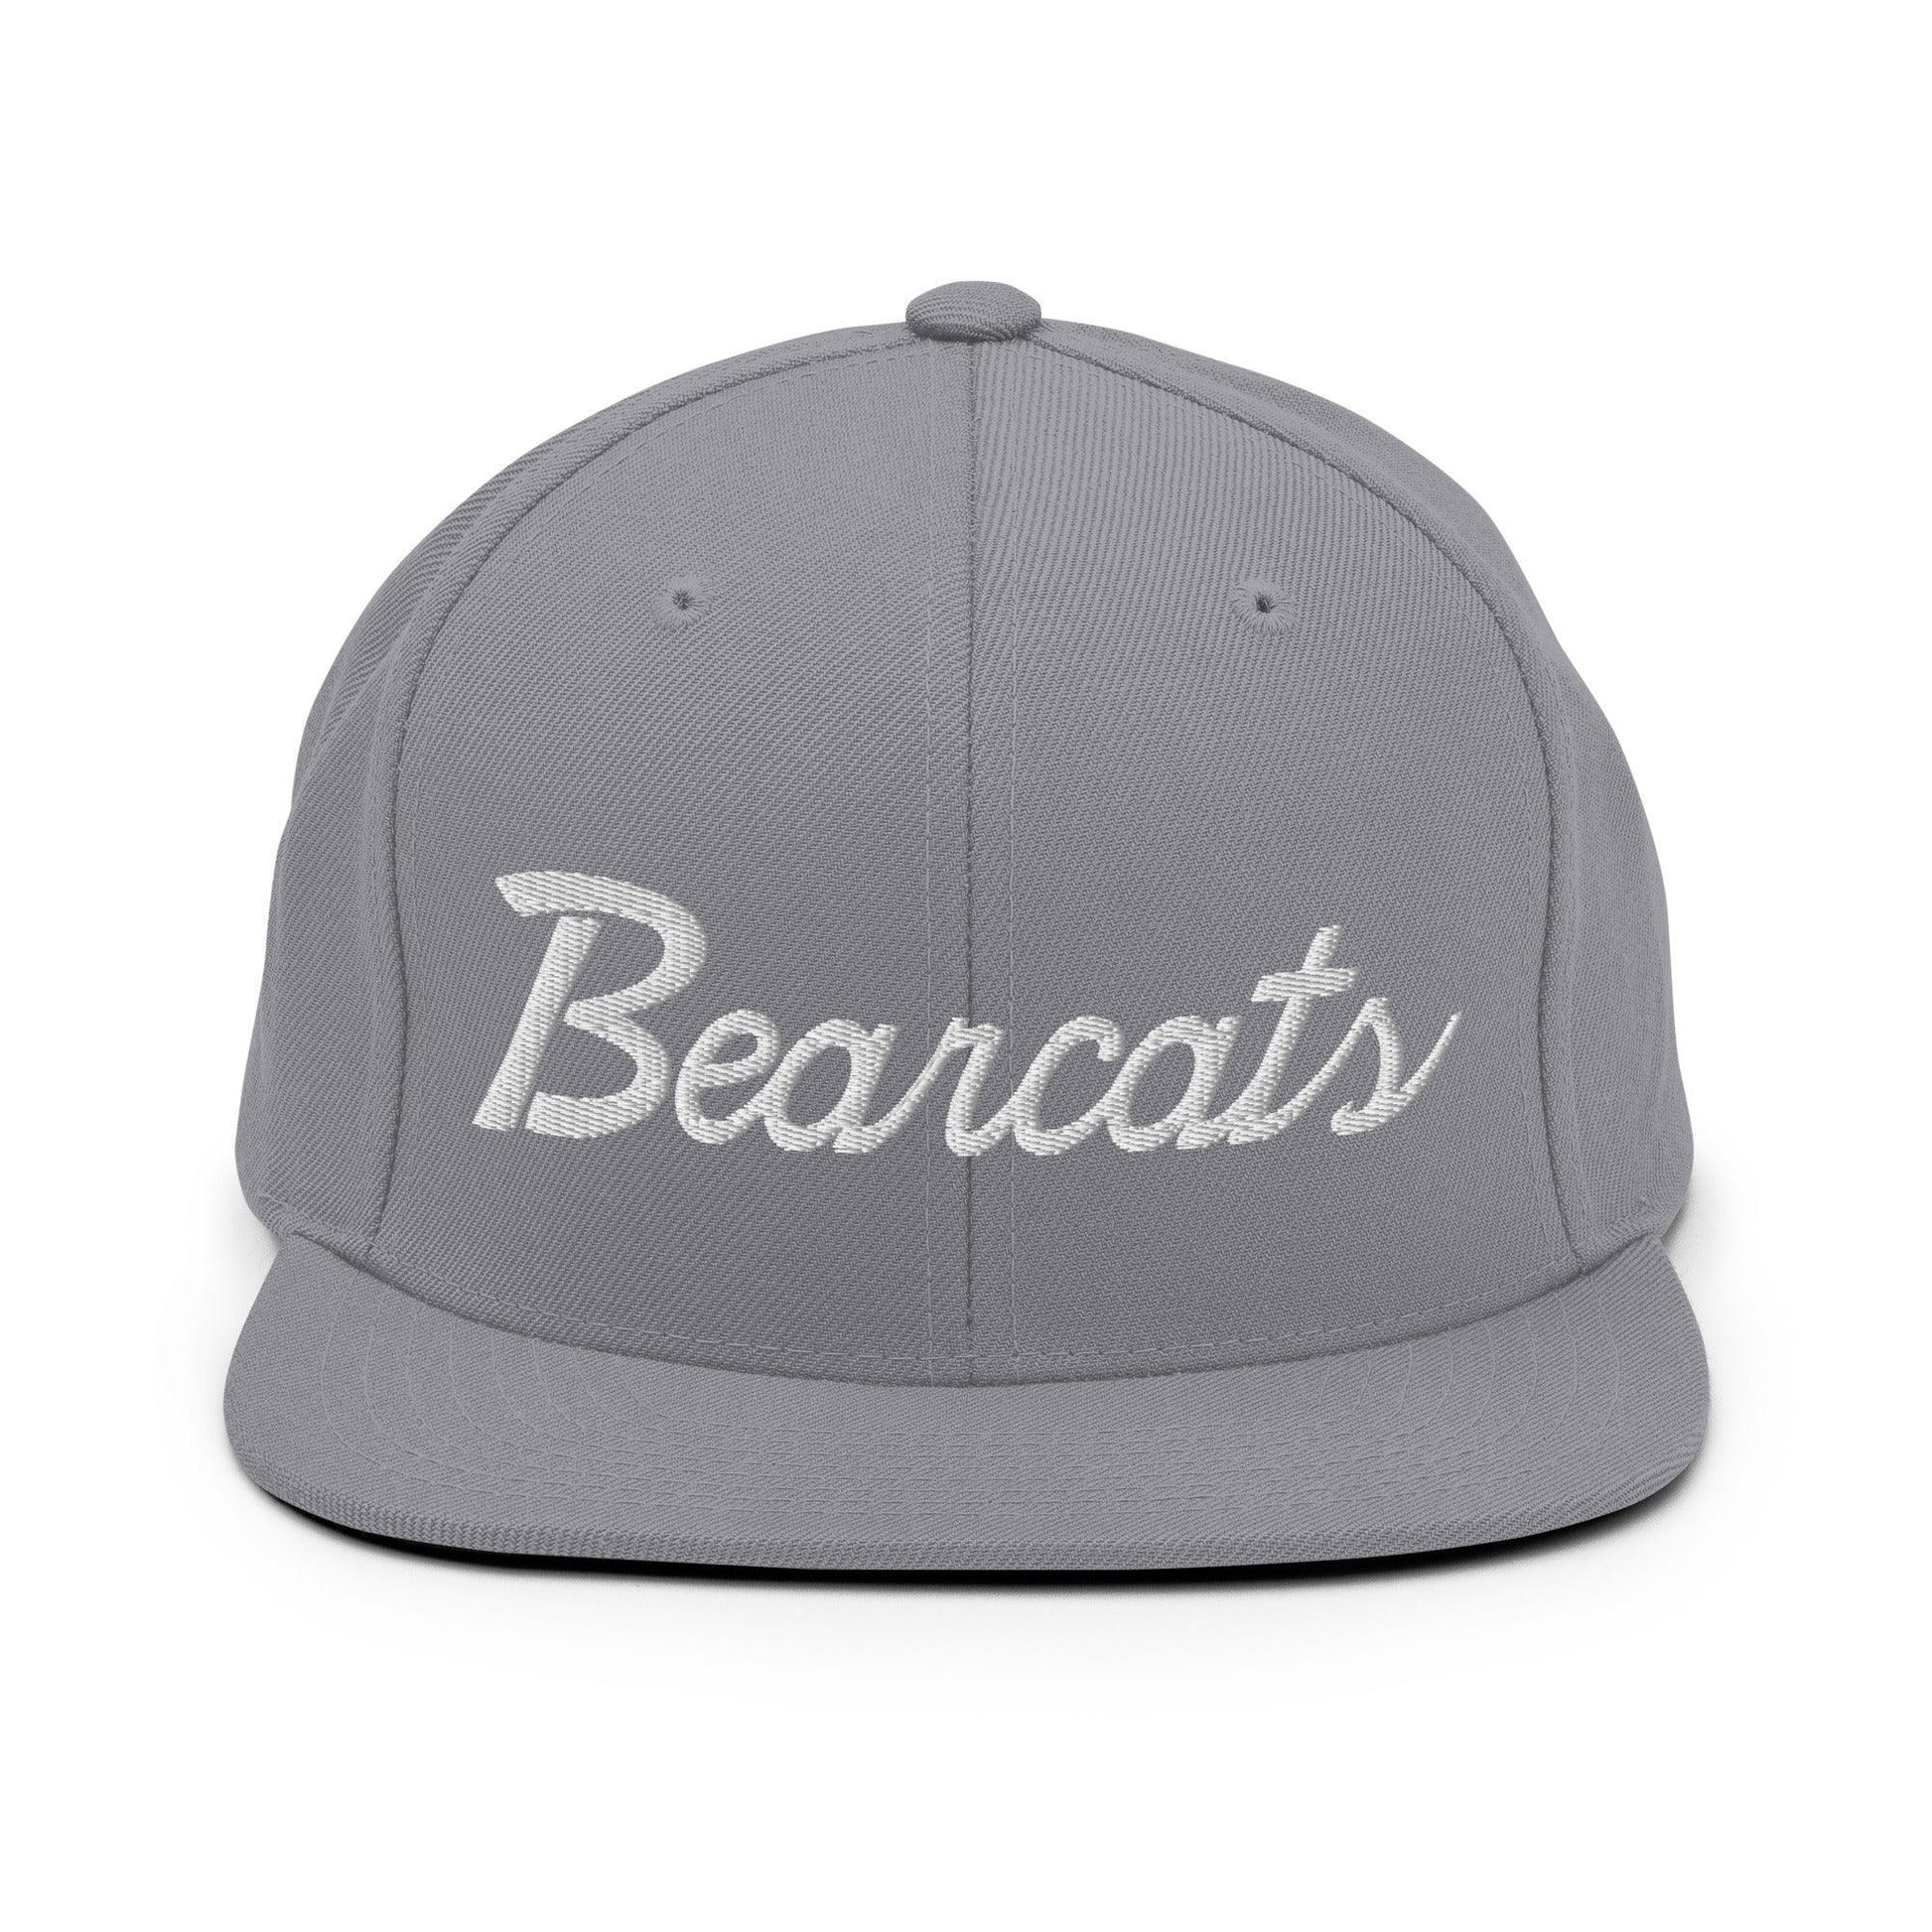 Bearcats School Mascot Script Snapback Hat Silver